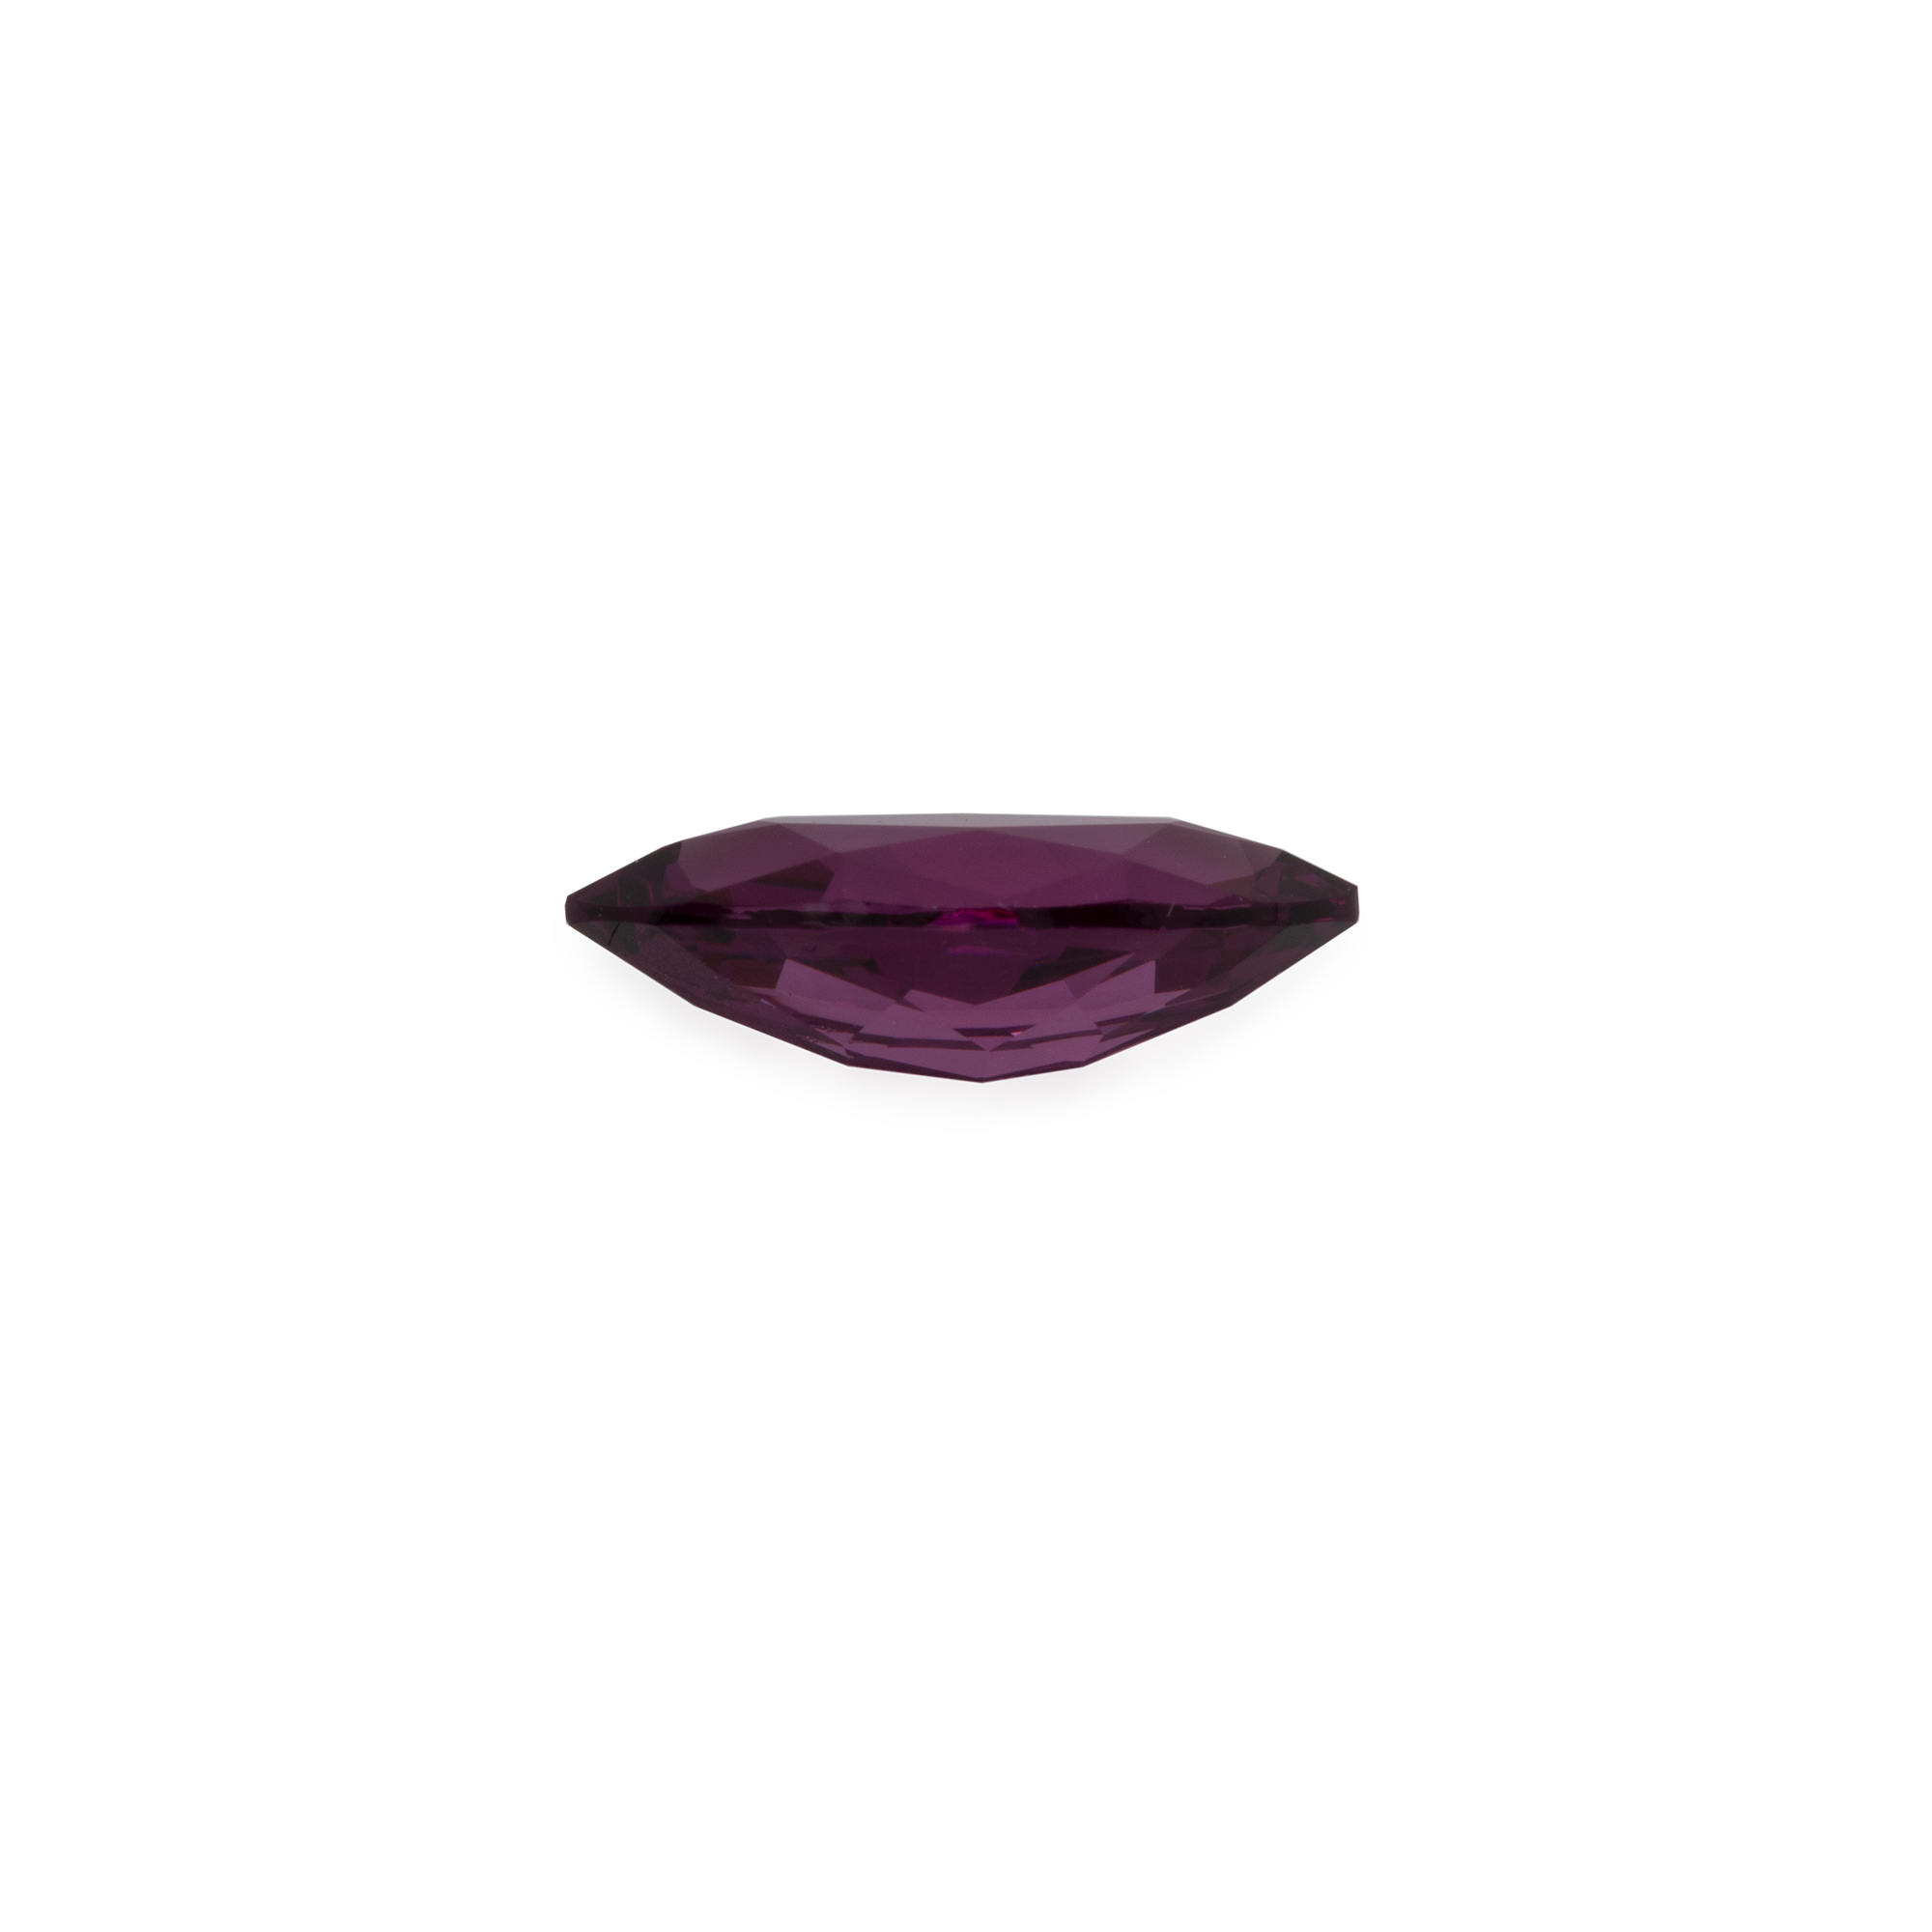 Royal Purple Garnet - lila, navette, 10x5 mm, 1,19-1,32 cts, Nr. RP37001